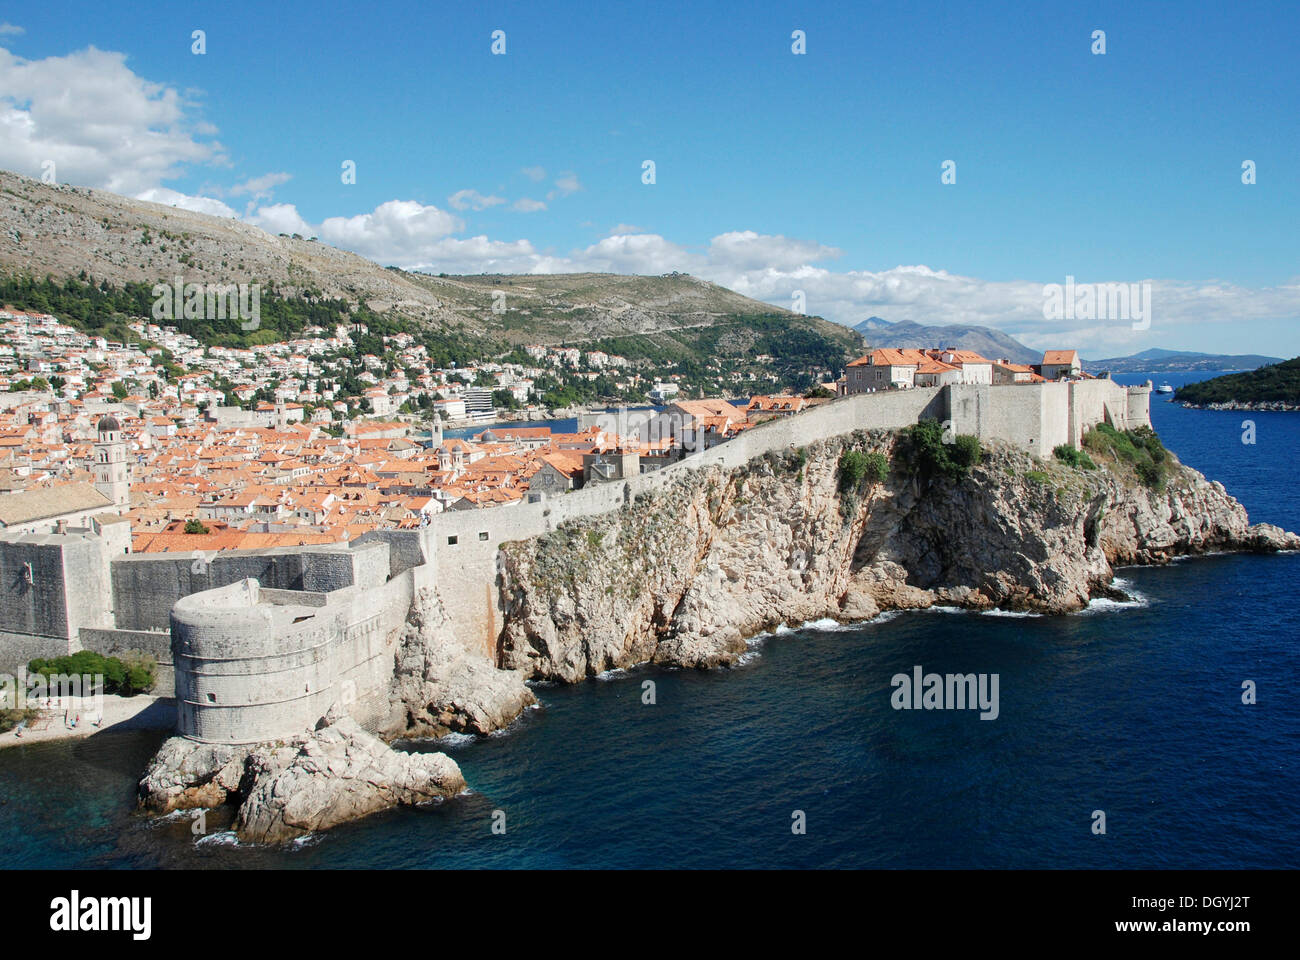 Blick auf die Altstadt und die Stadtmauer, die Festung Lovrijenac, Dubrovnik, Kroatien, europee Stockfoto